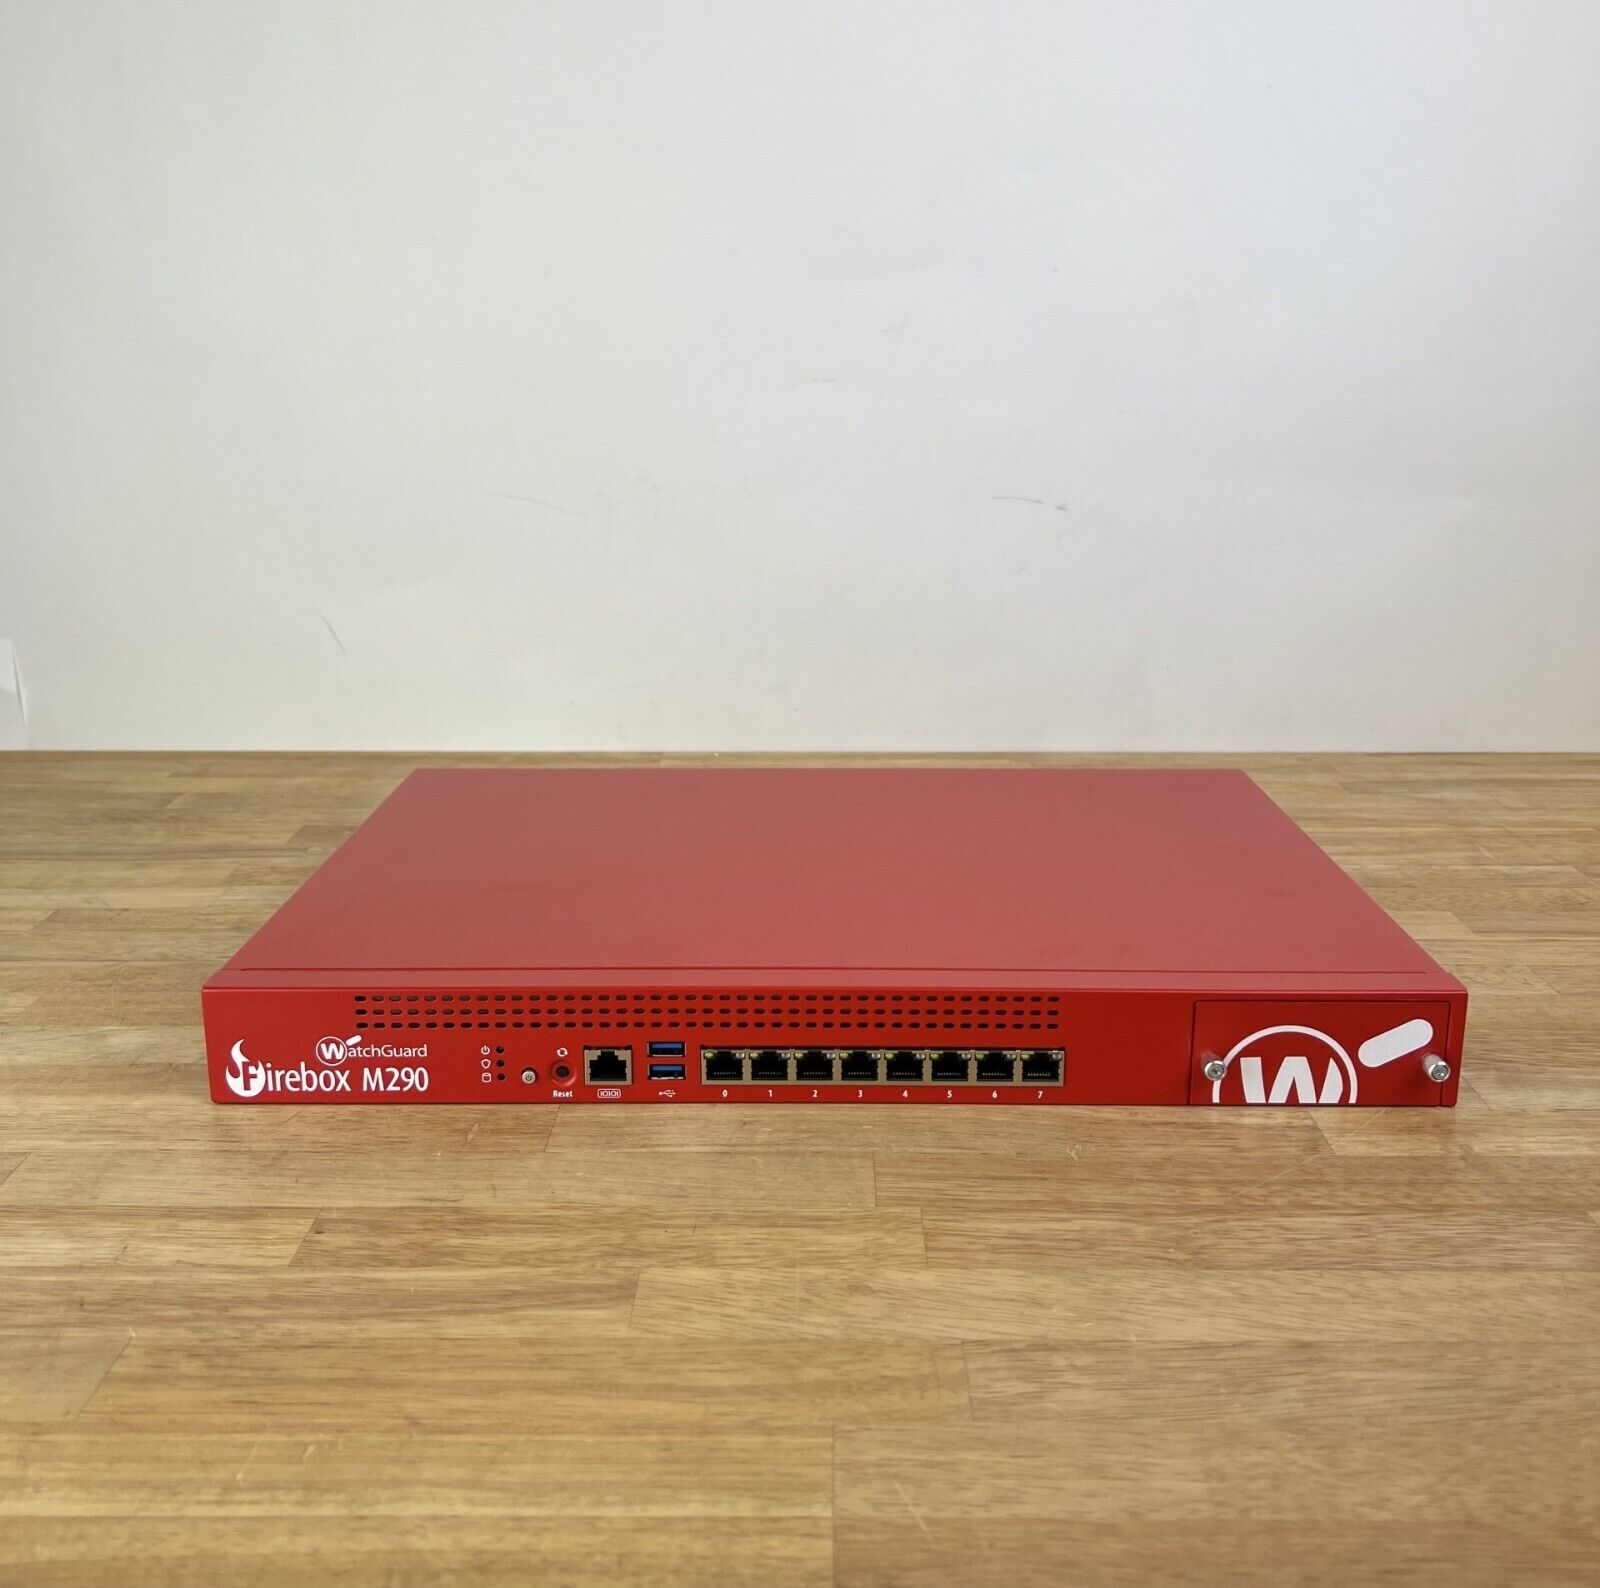 WatchGuard Firebox M290 8 Port Security Firewall Appliance Only WGM29000100